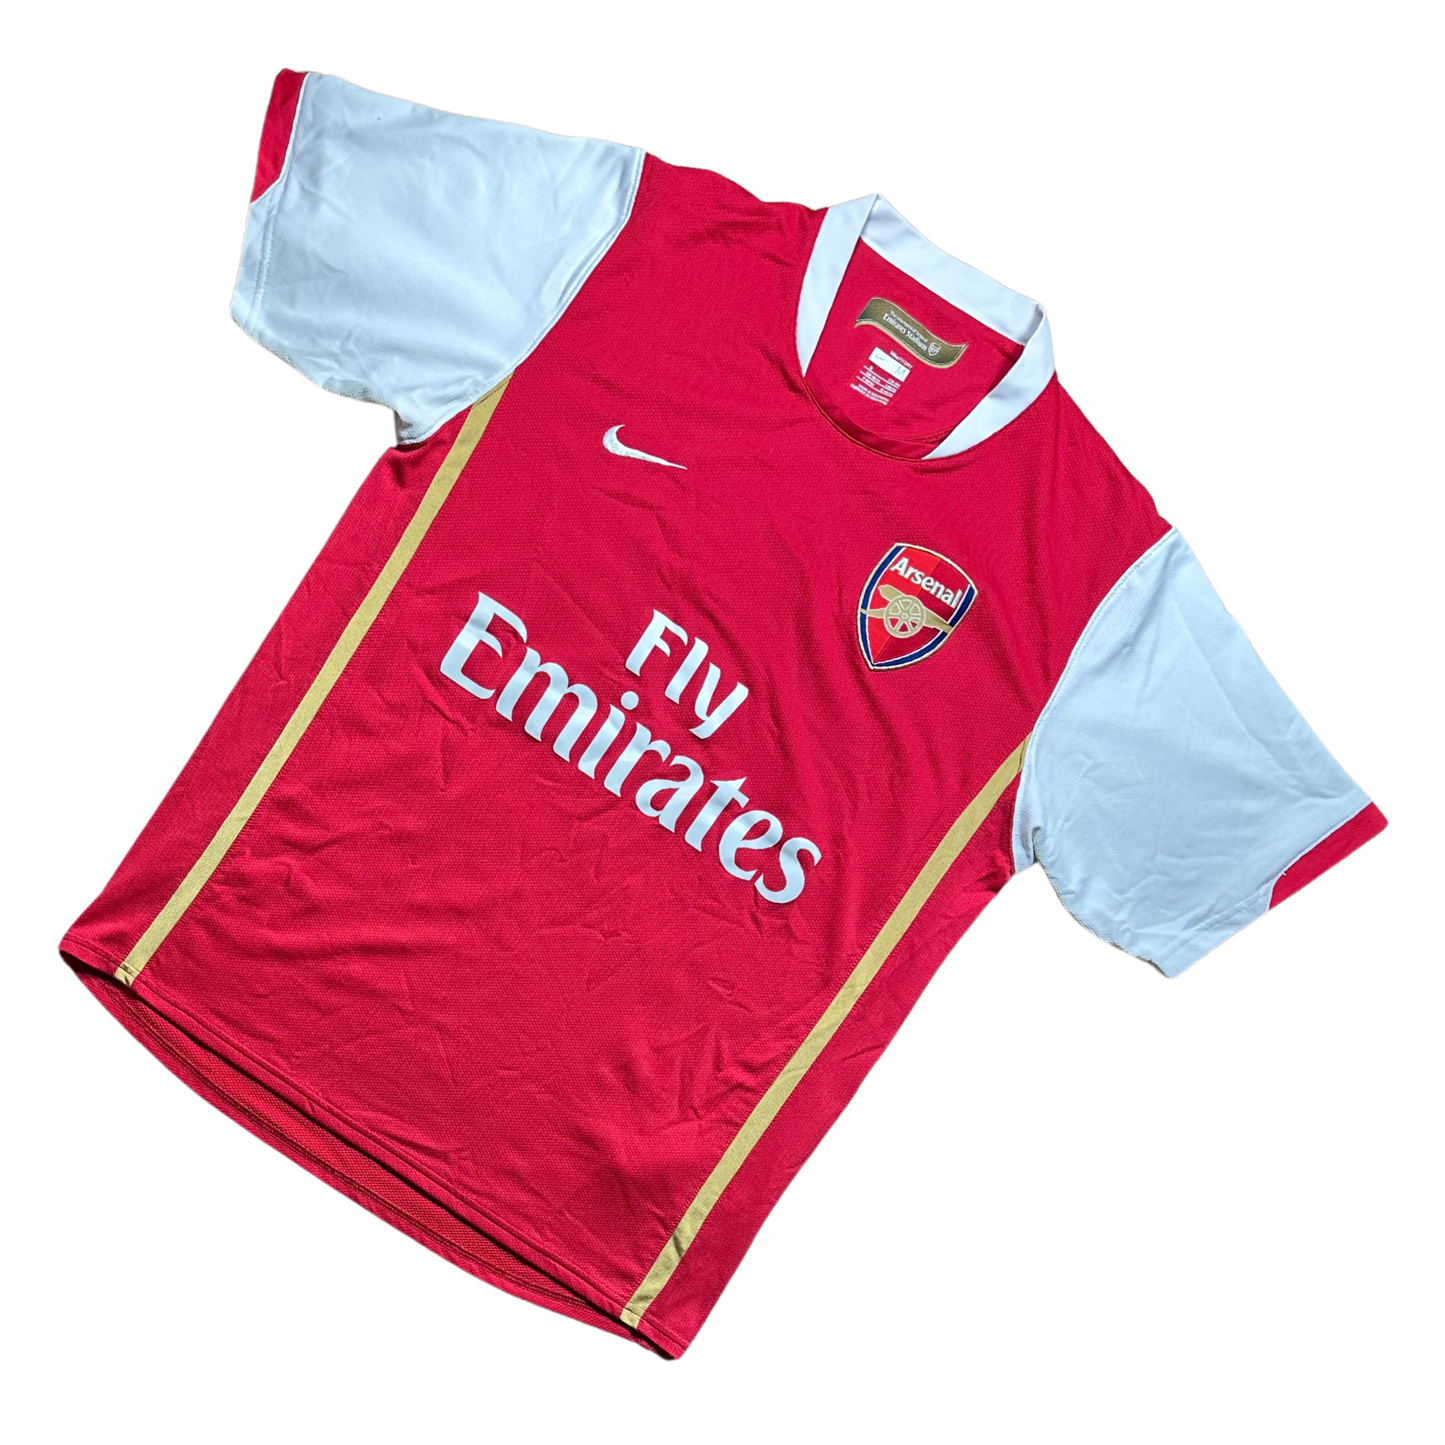 Arsenal 2006/2008 Home Football Shirt